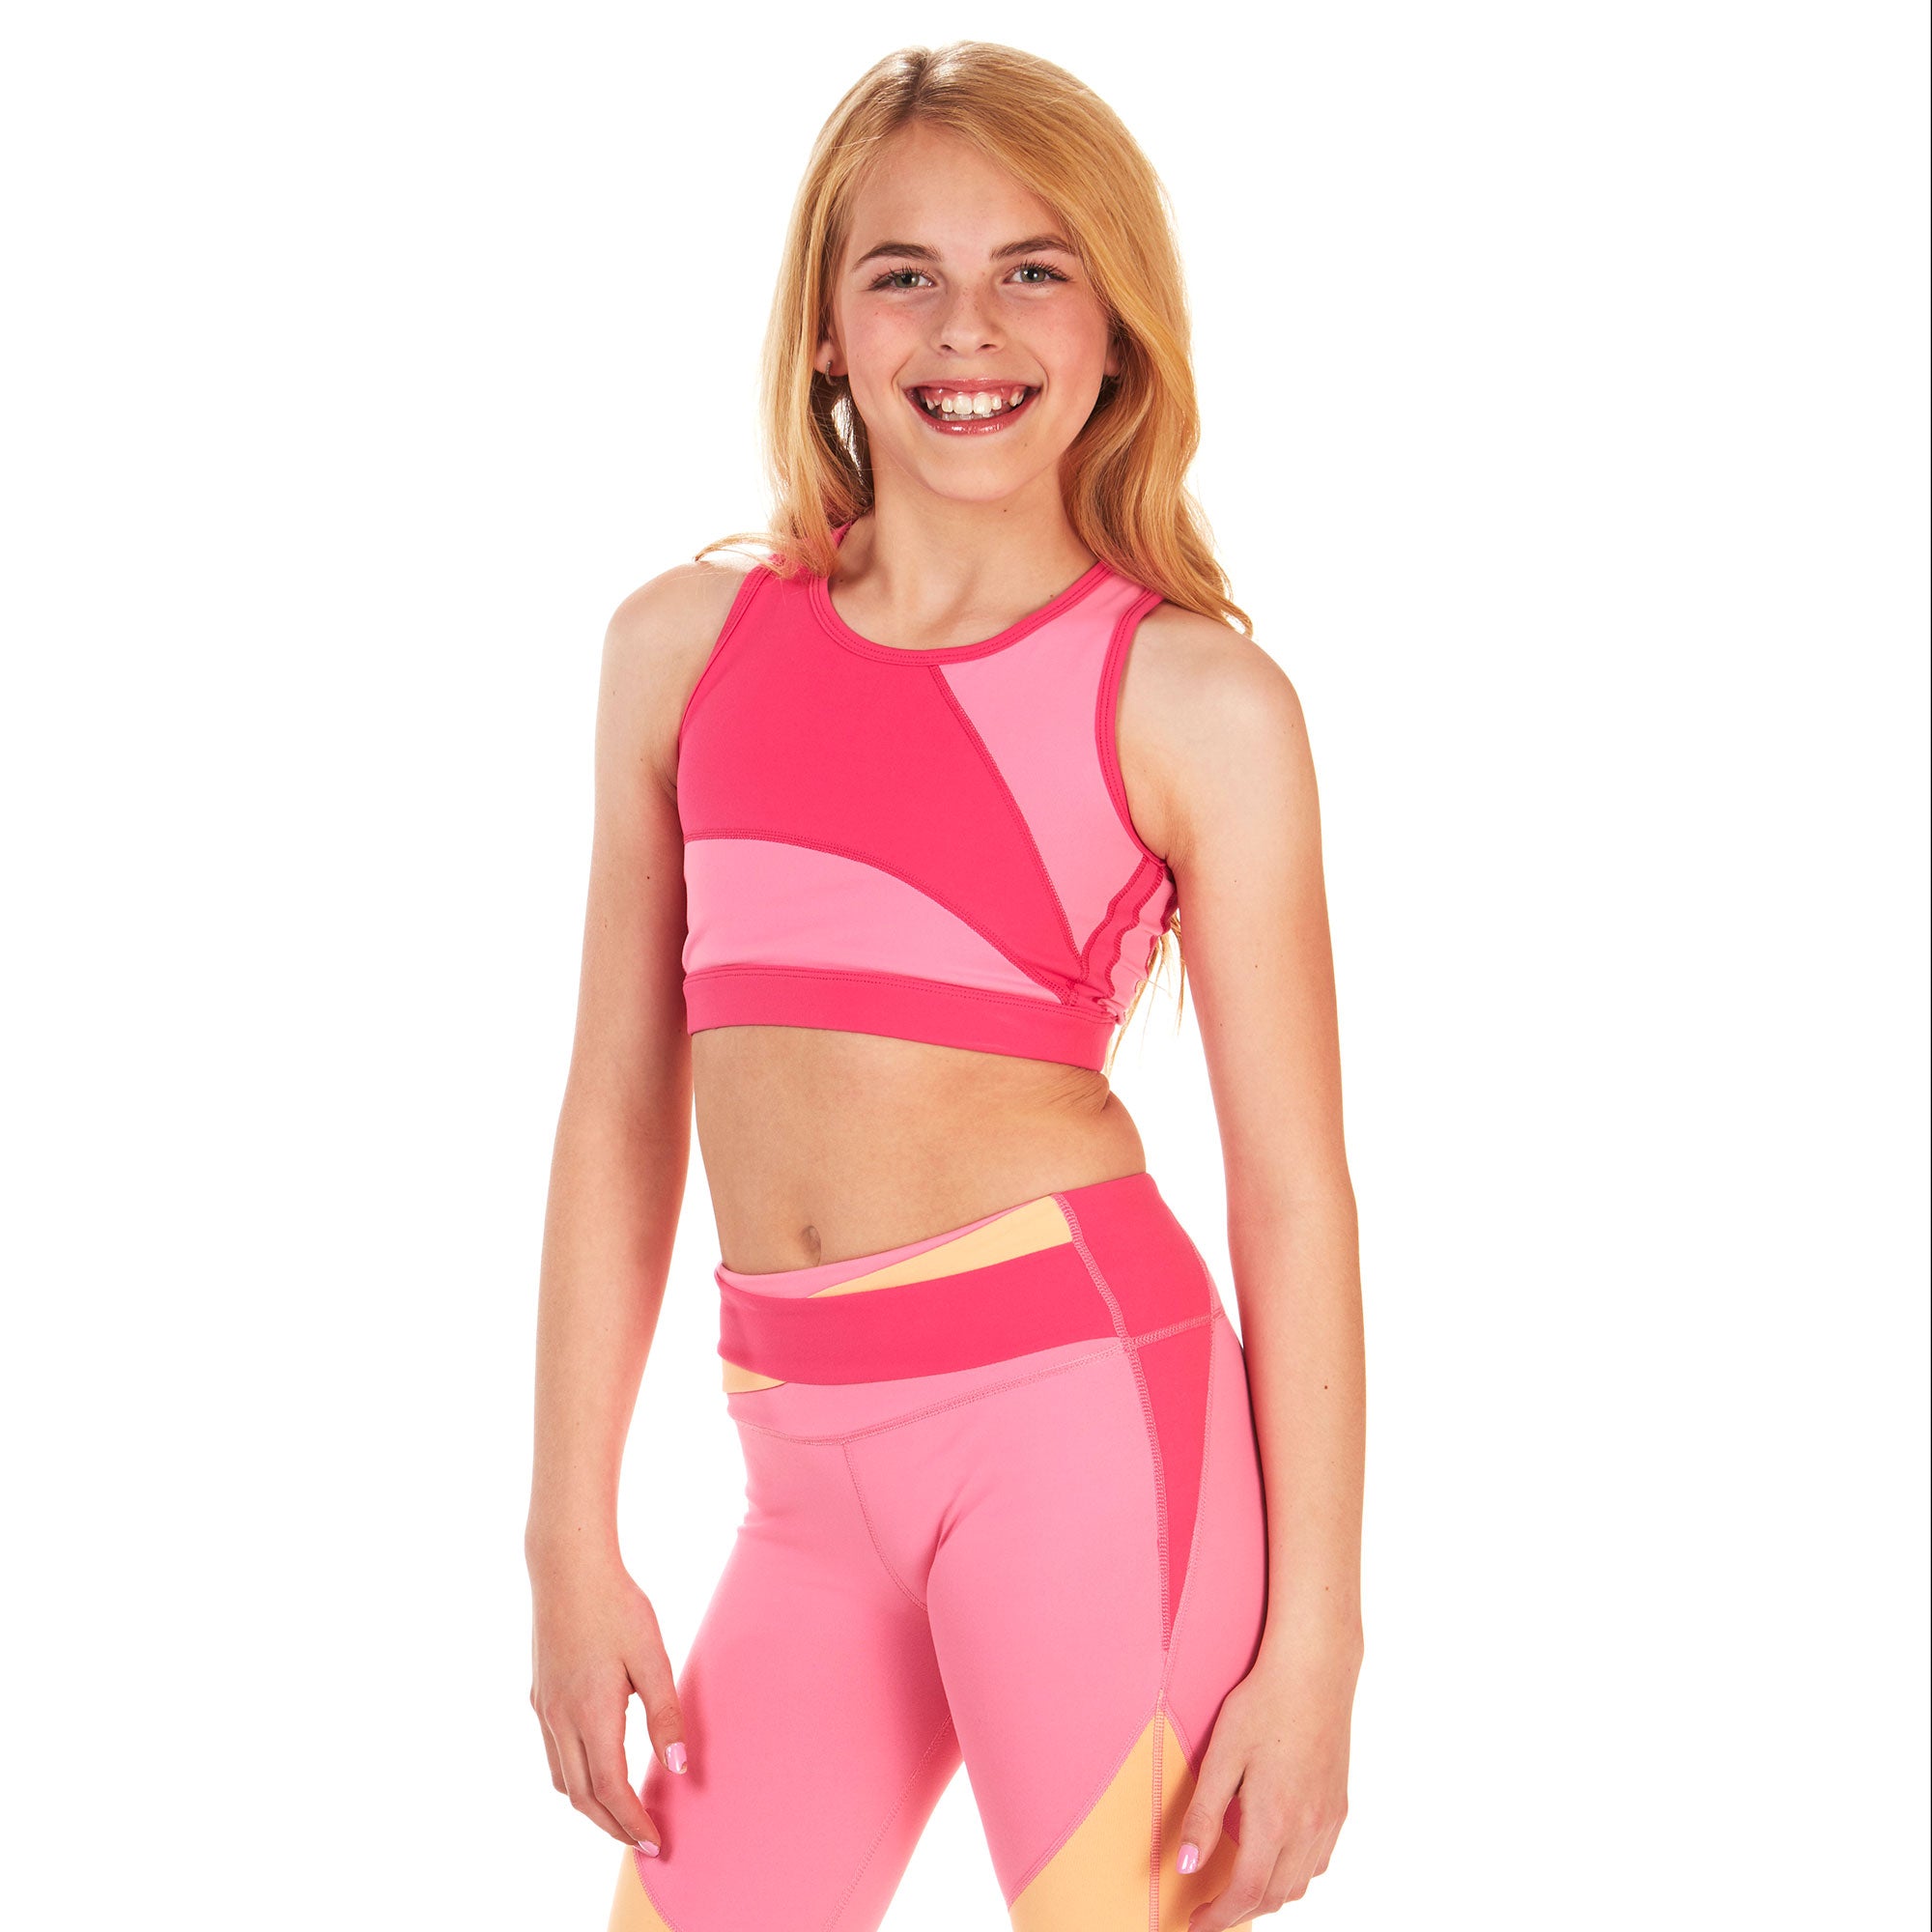 Kurve Dance Top Sports Bra Hot Pink Crop Shirt Young Adult Teen Nylon